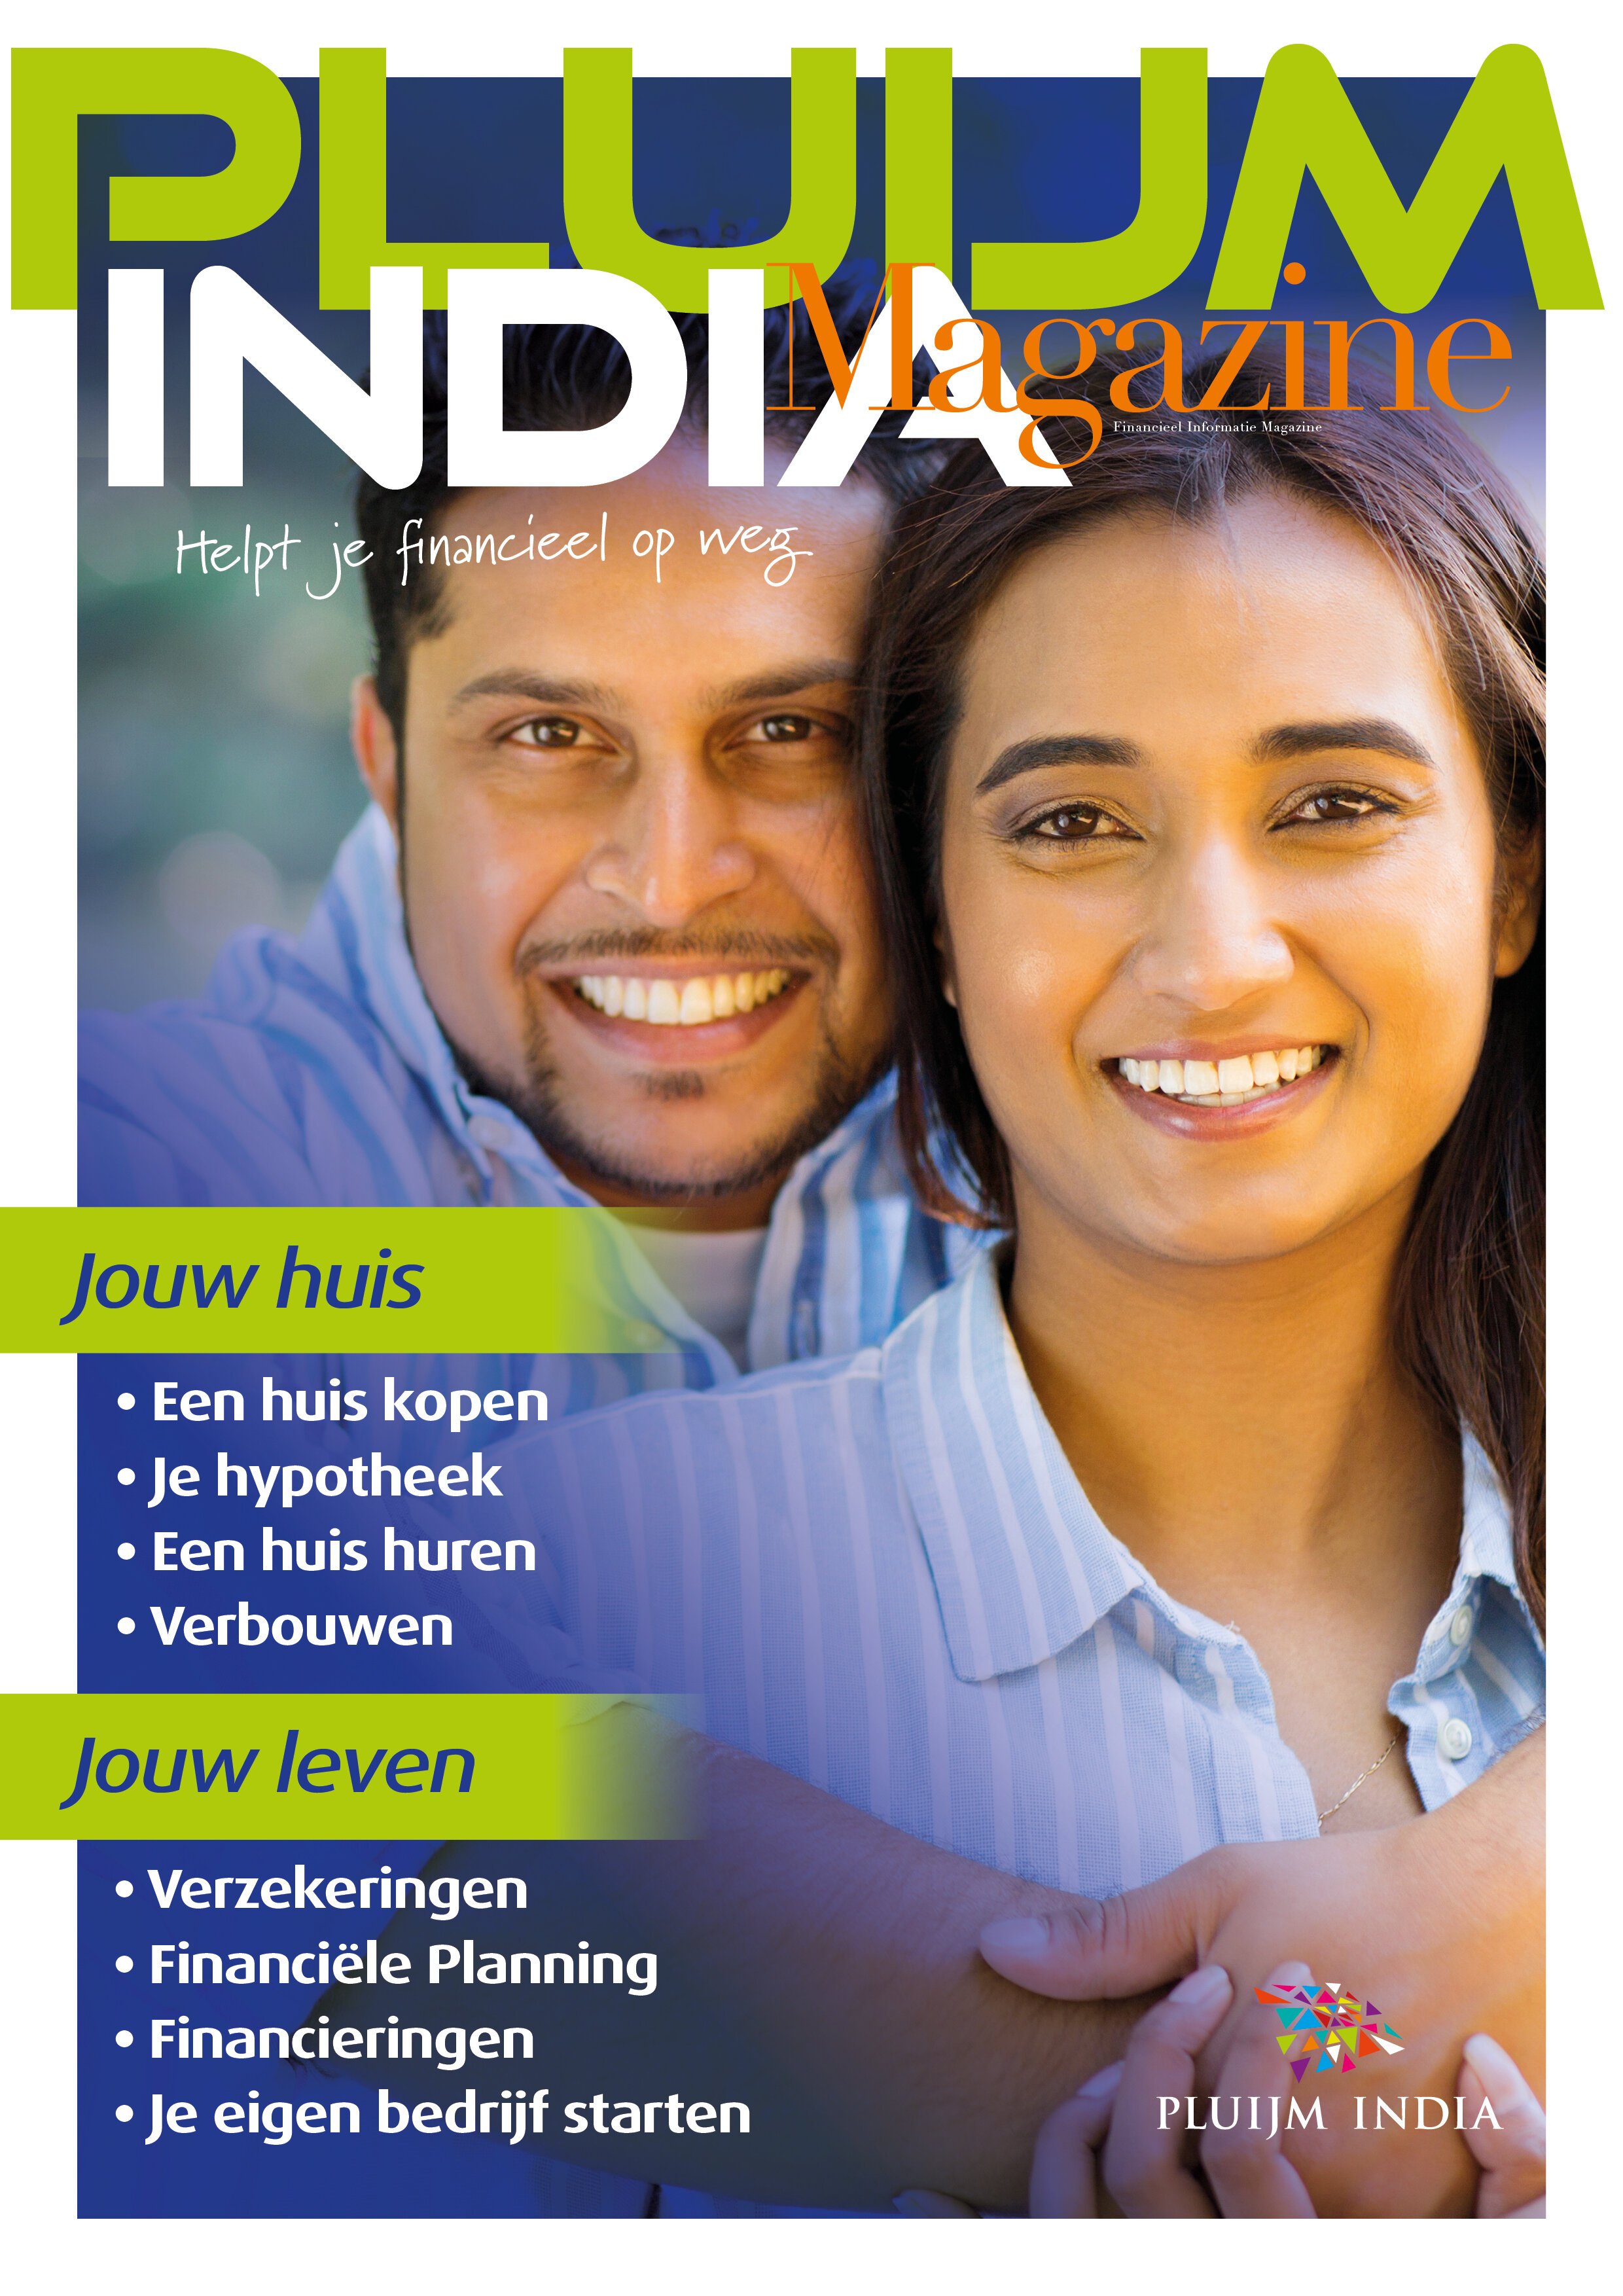 Magazine-PLUIJM-INDIA-GRAFIMAX.jpg